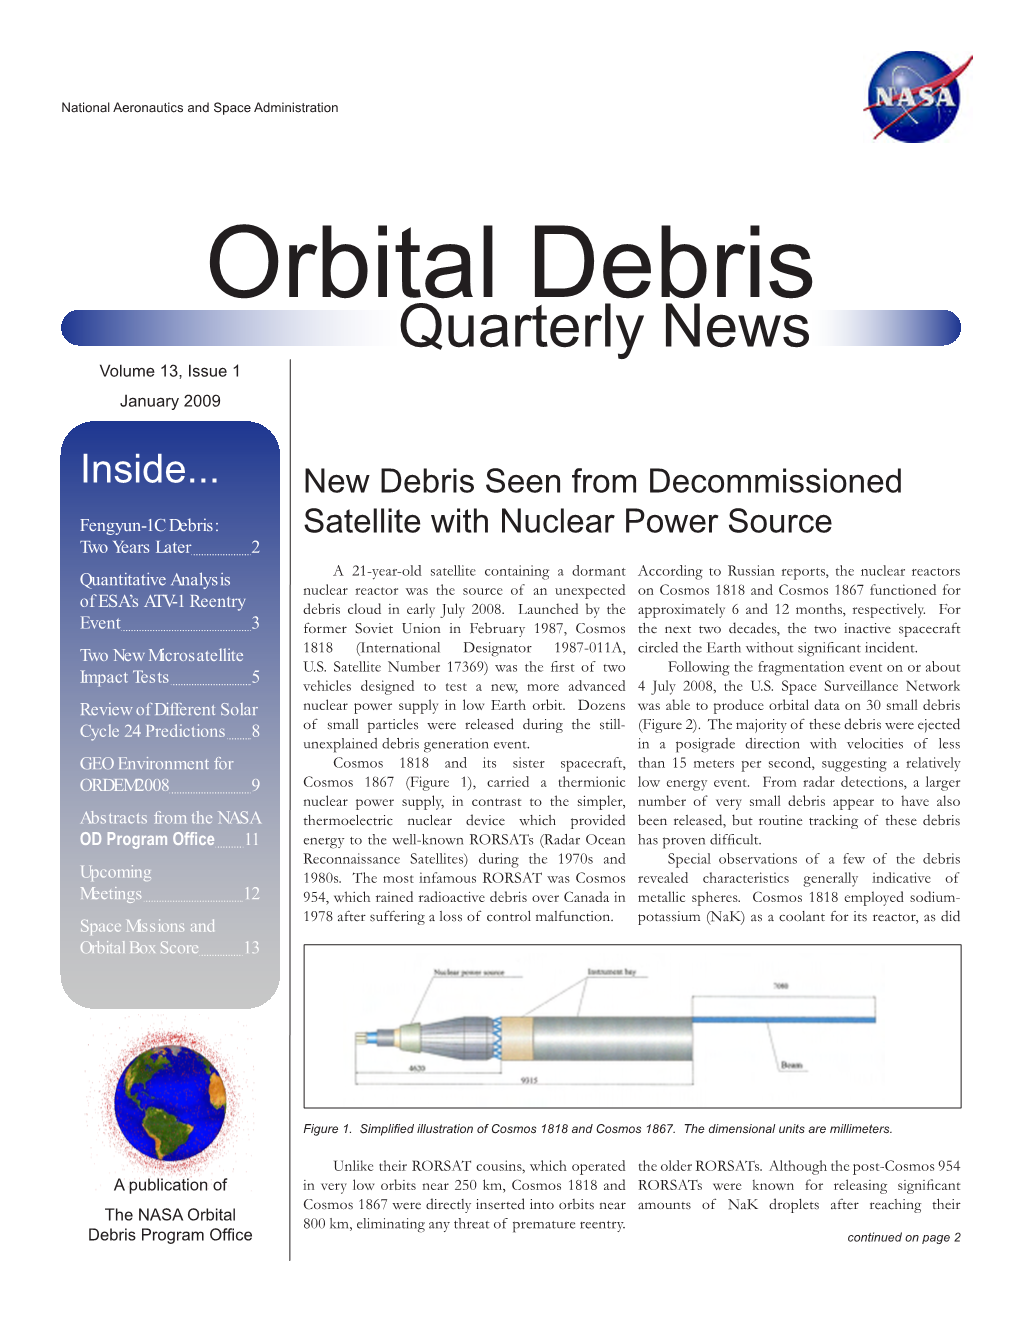 Orbital Debris Quarterly News Volume 13, Issue 1 January 2009